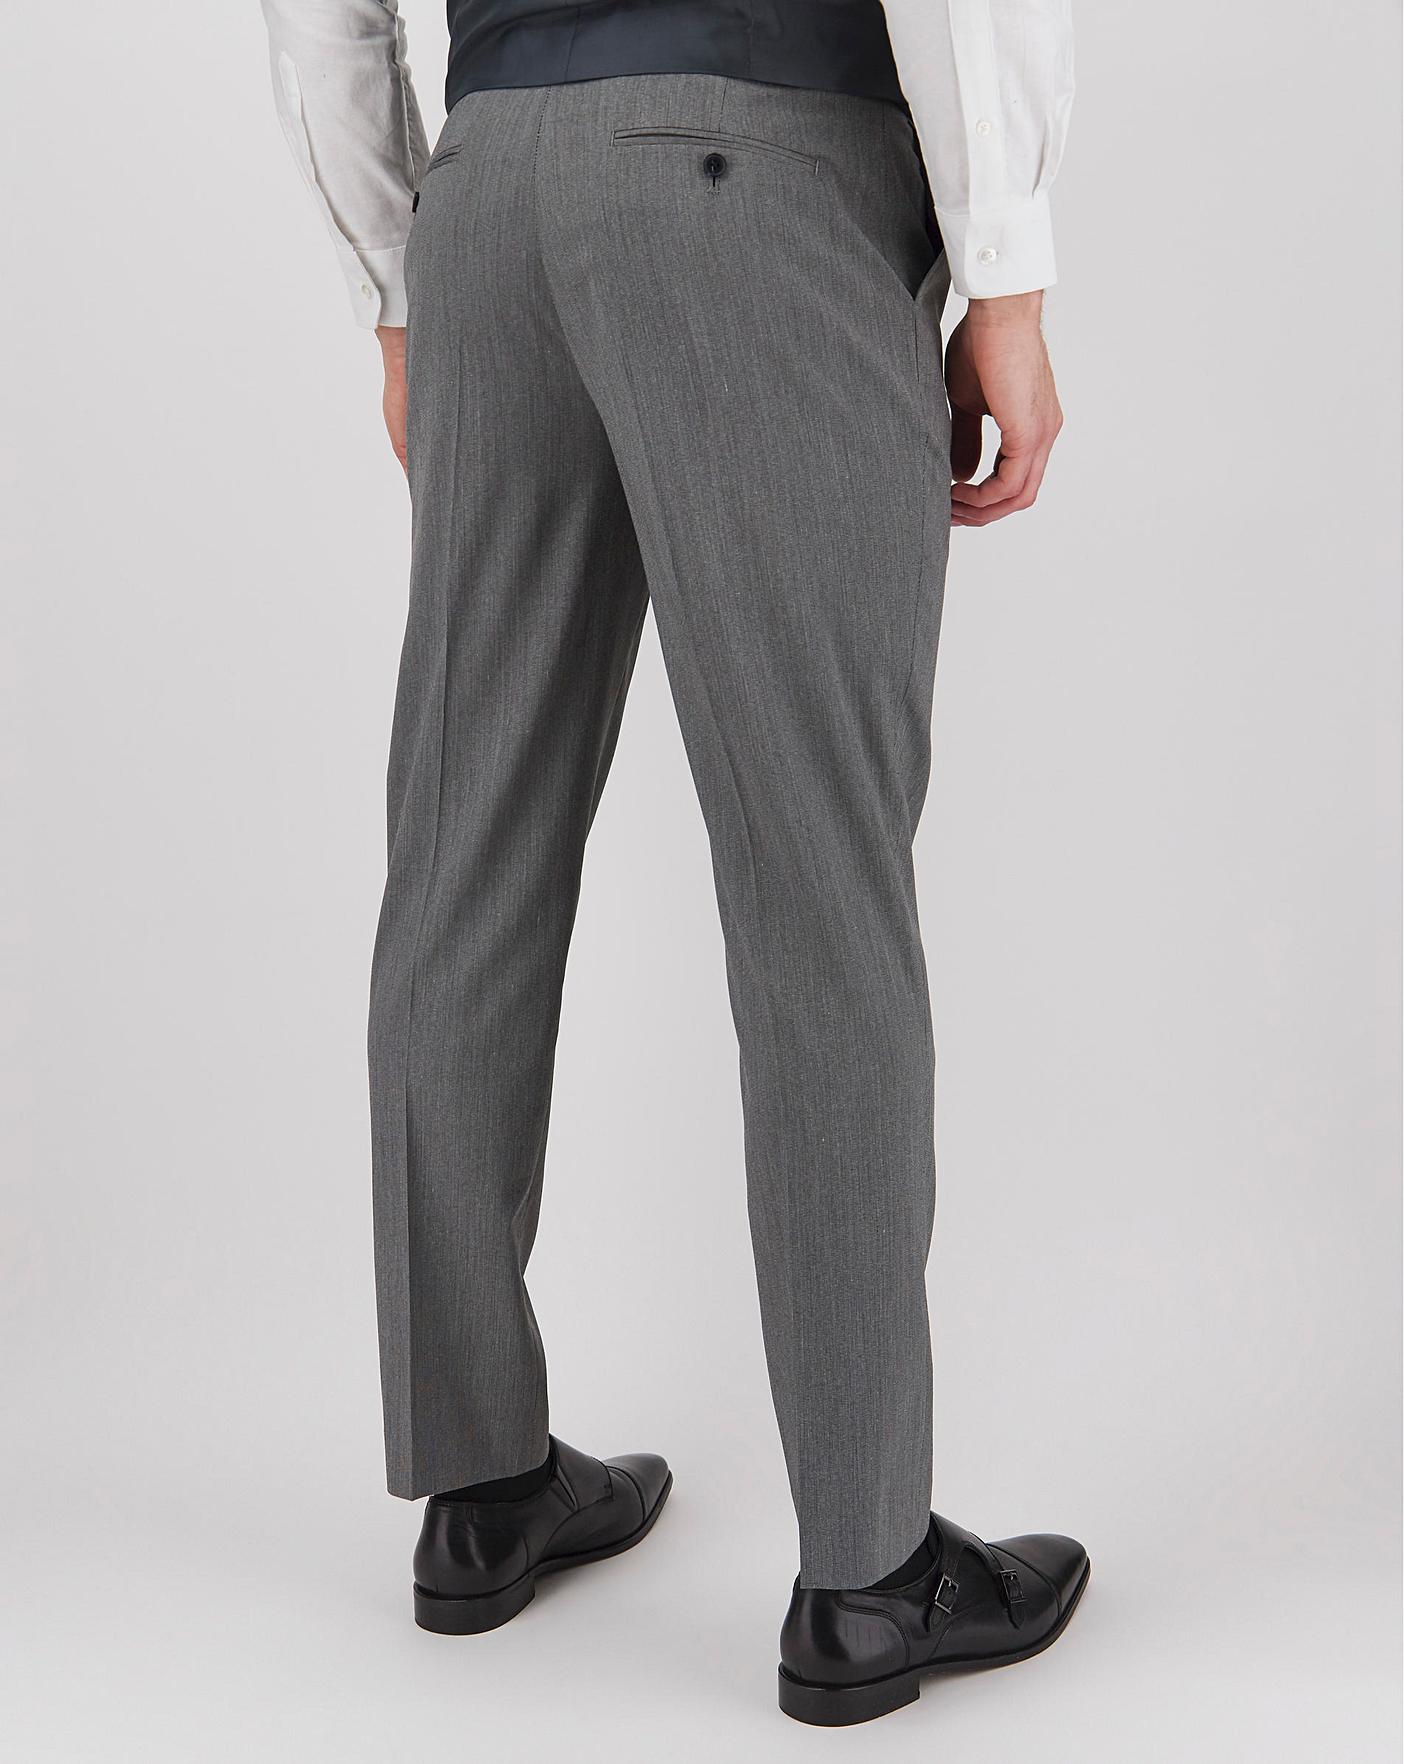 Buy ARROW Dark Grey Mens Flat Front Slim Fit Trousers | Shoppers Stop